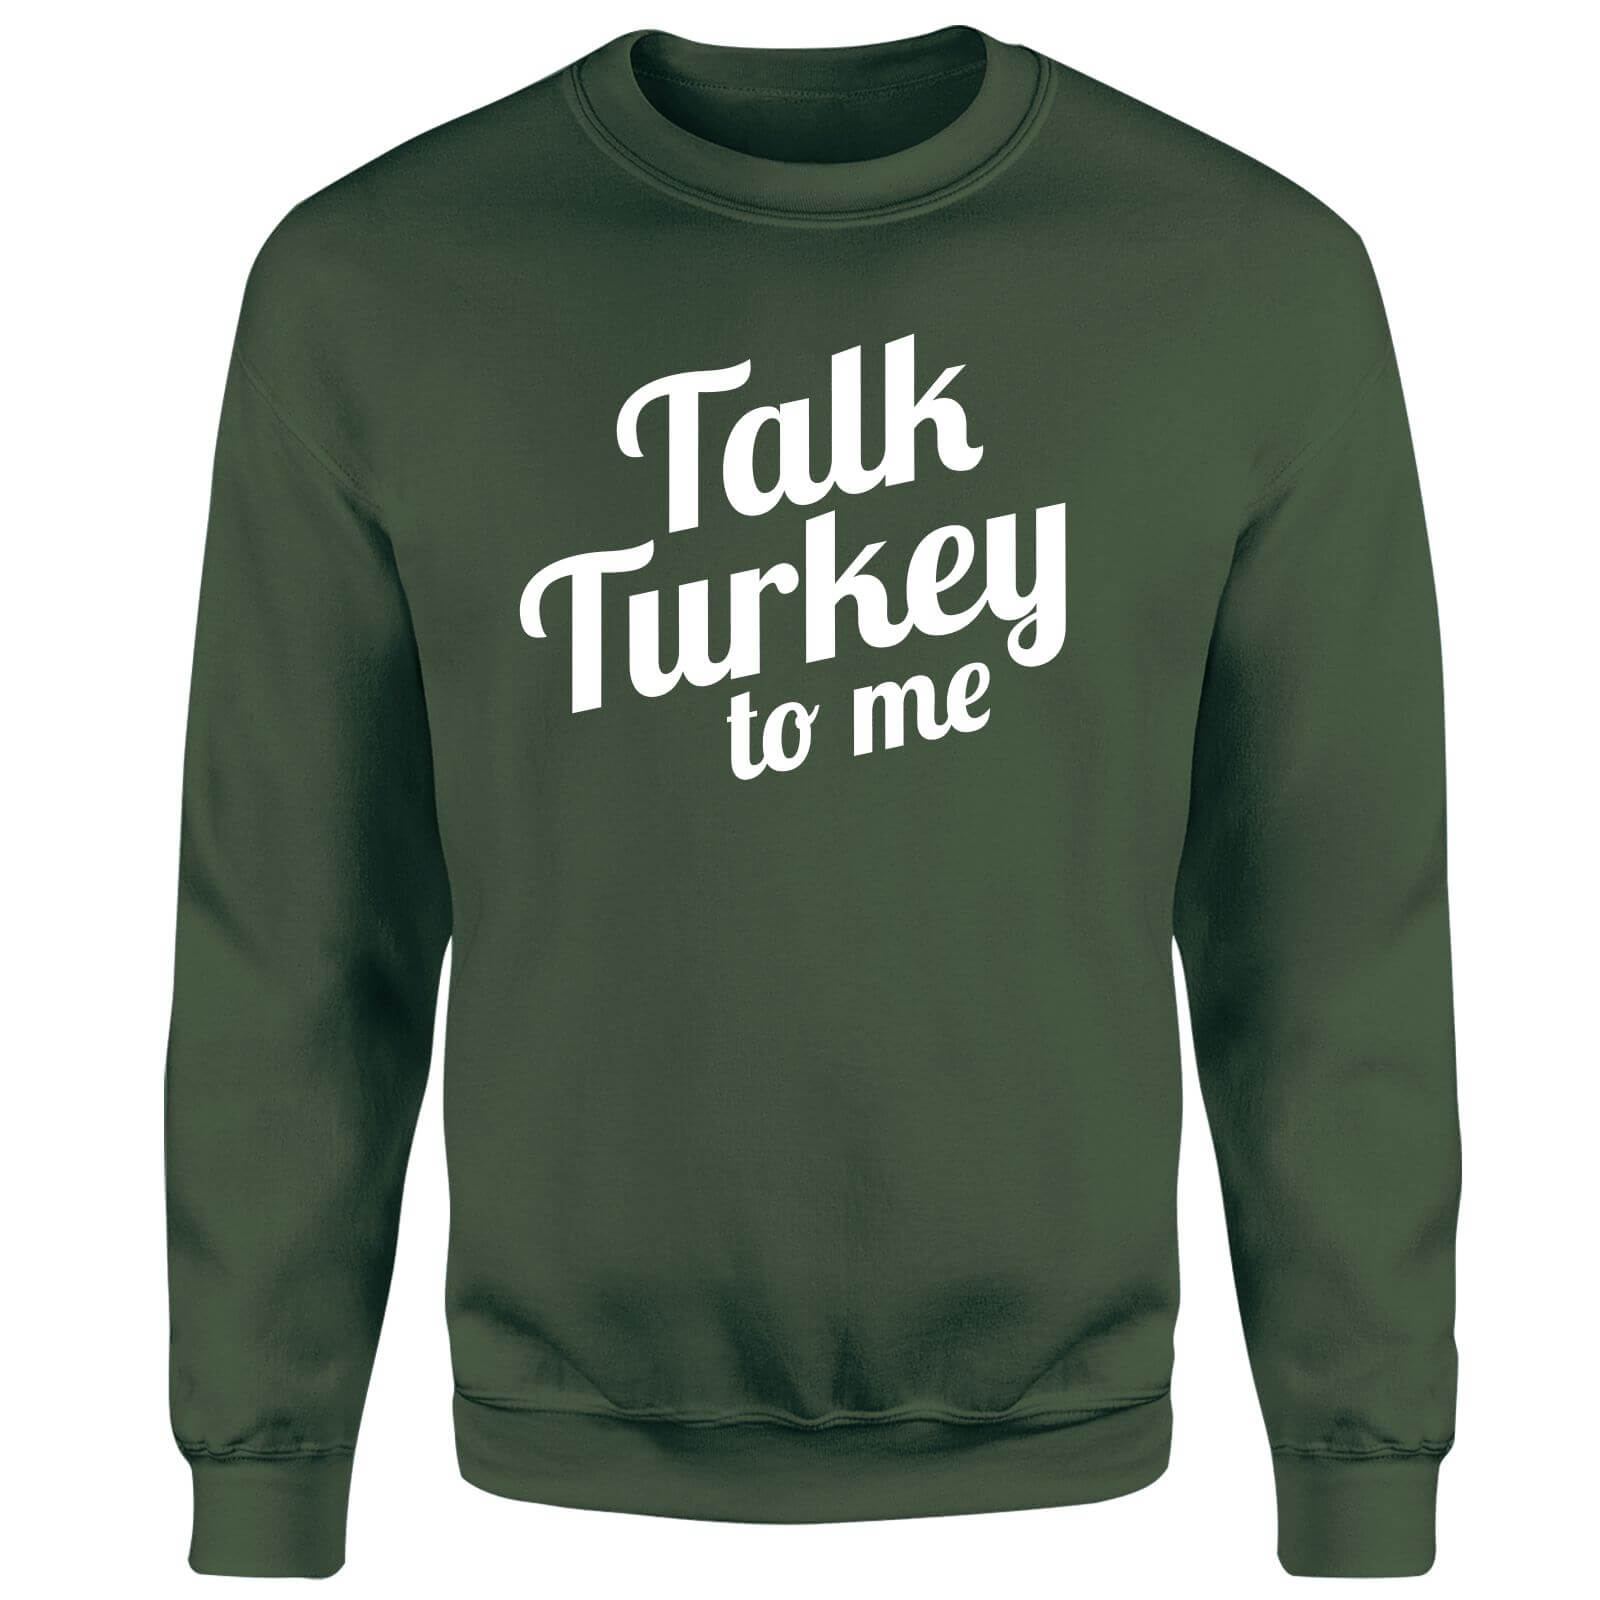 Talk Turkey To Me Unisex Sweatshirt - Green - S - Green